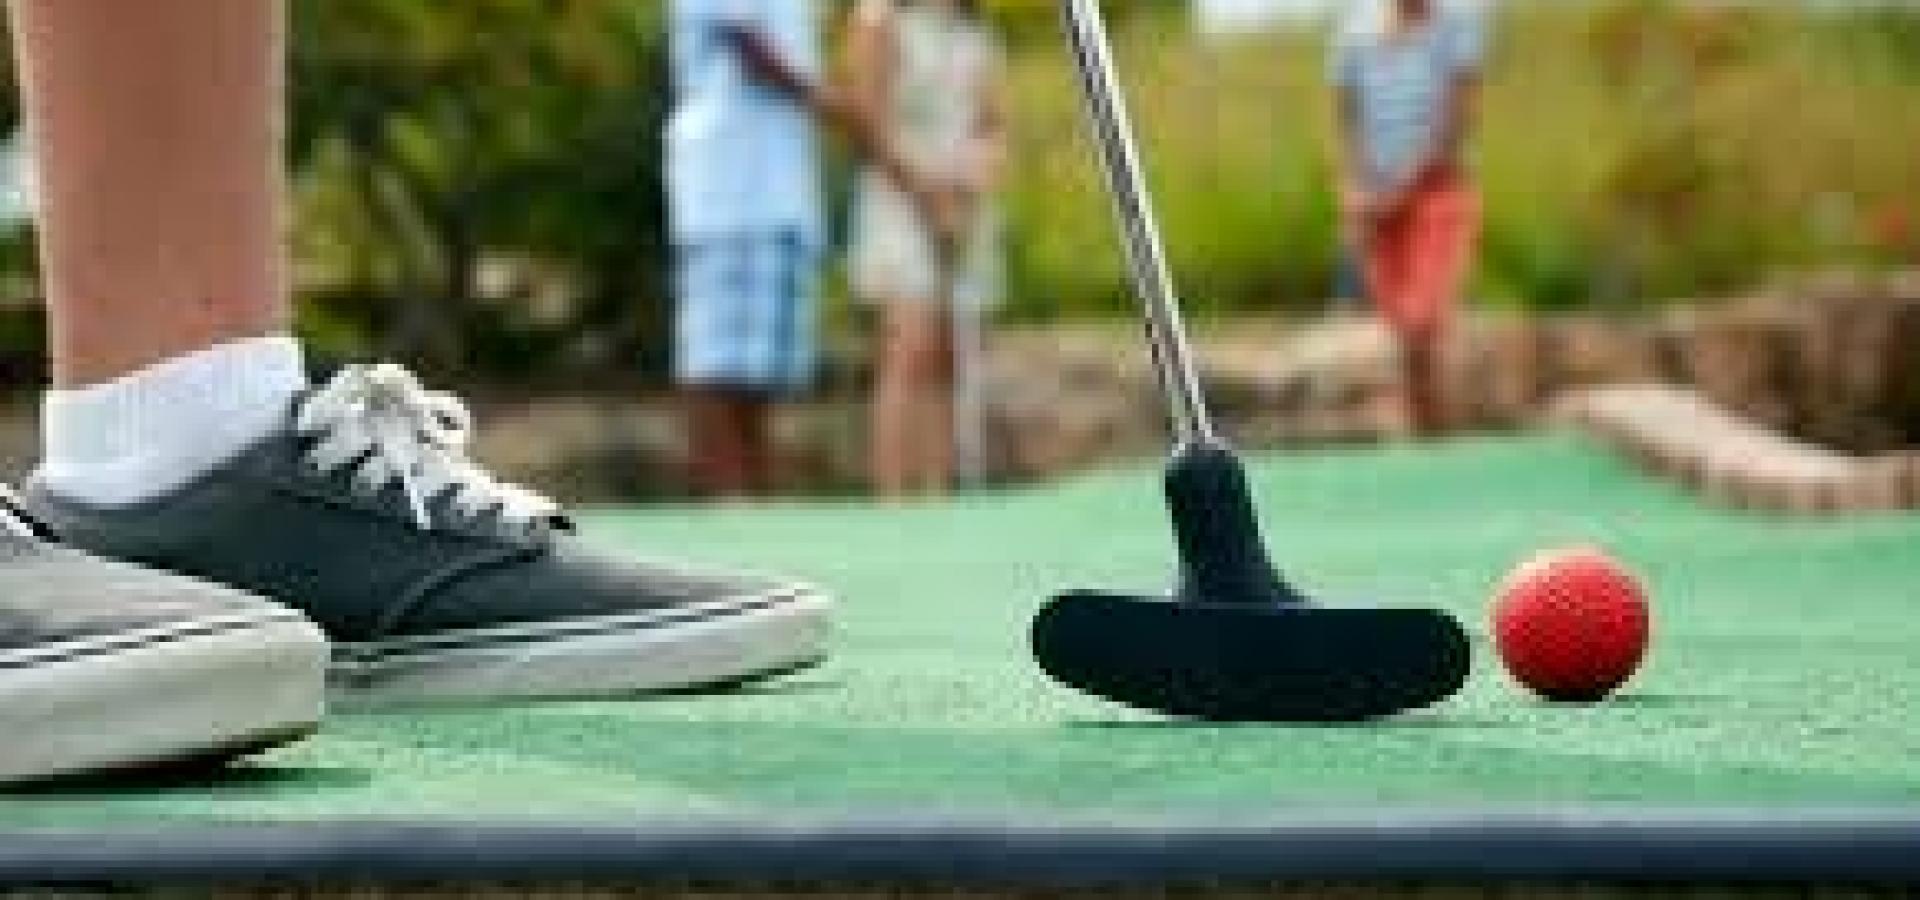 Minigolf, minigolfbana, golf